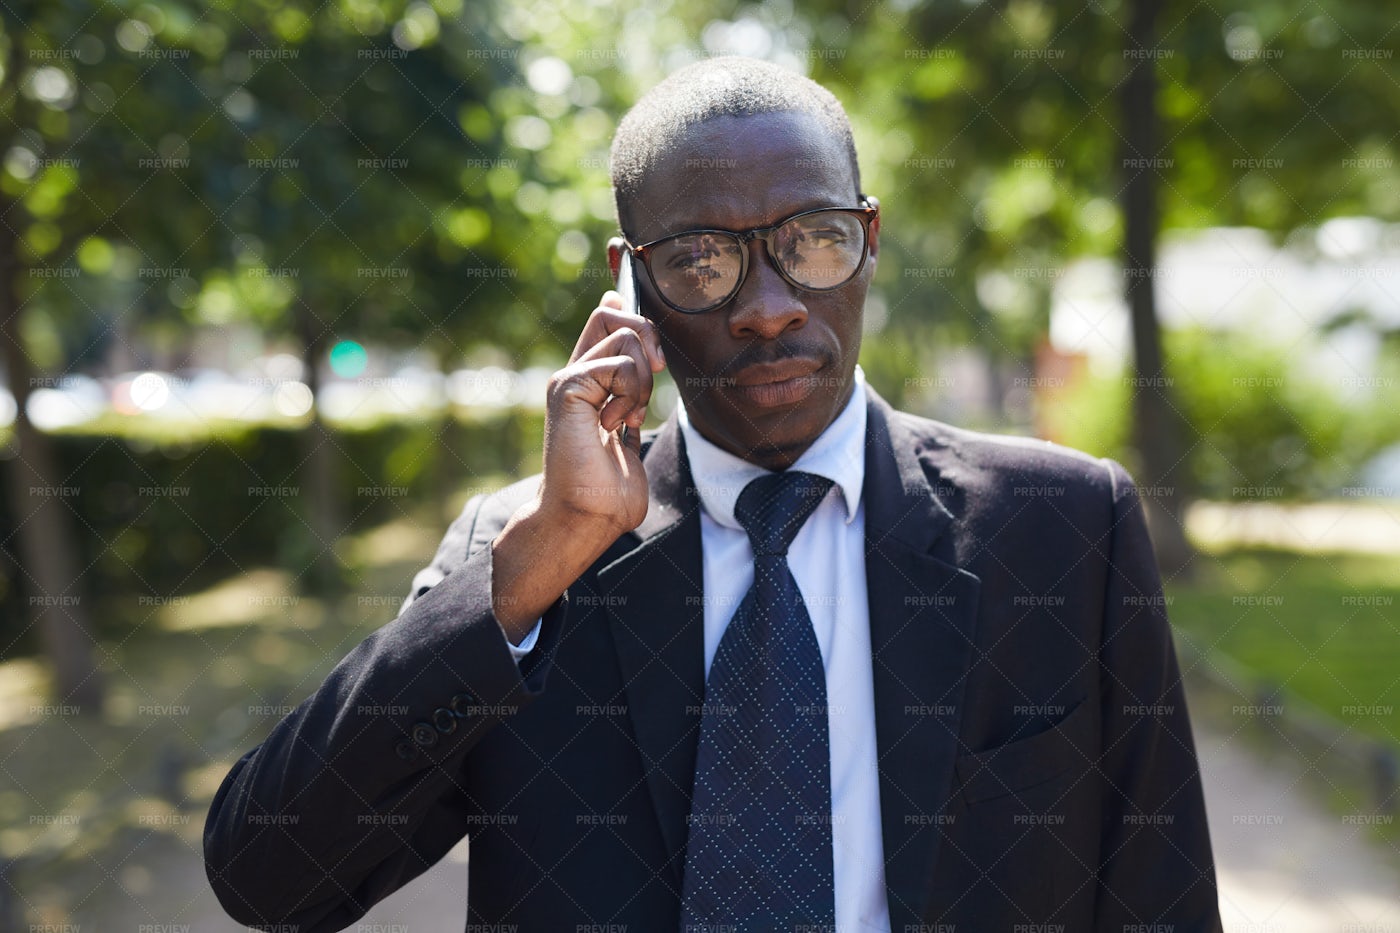 African-American Businessman...: Stock Photos